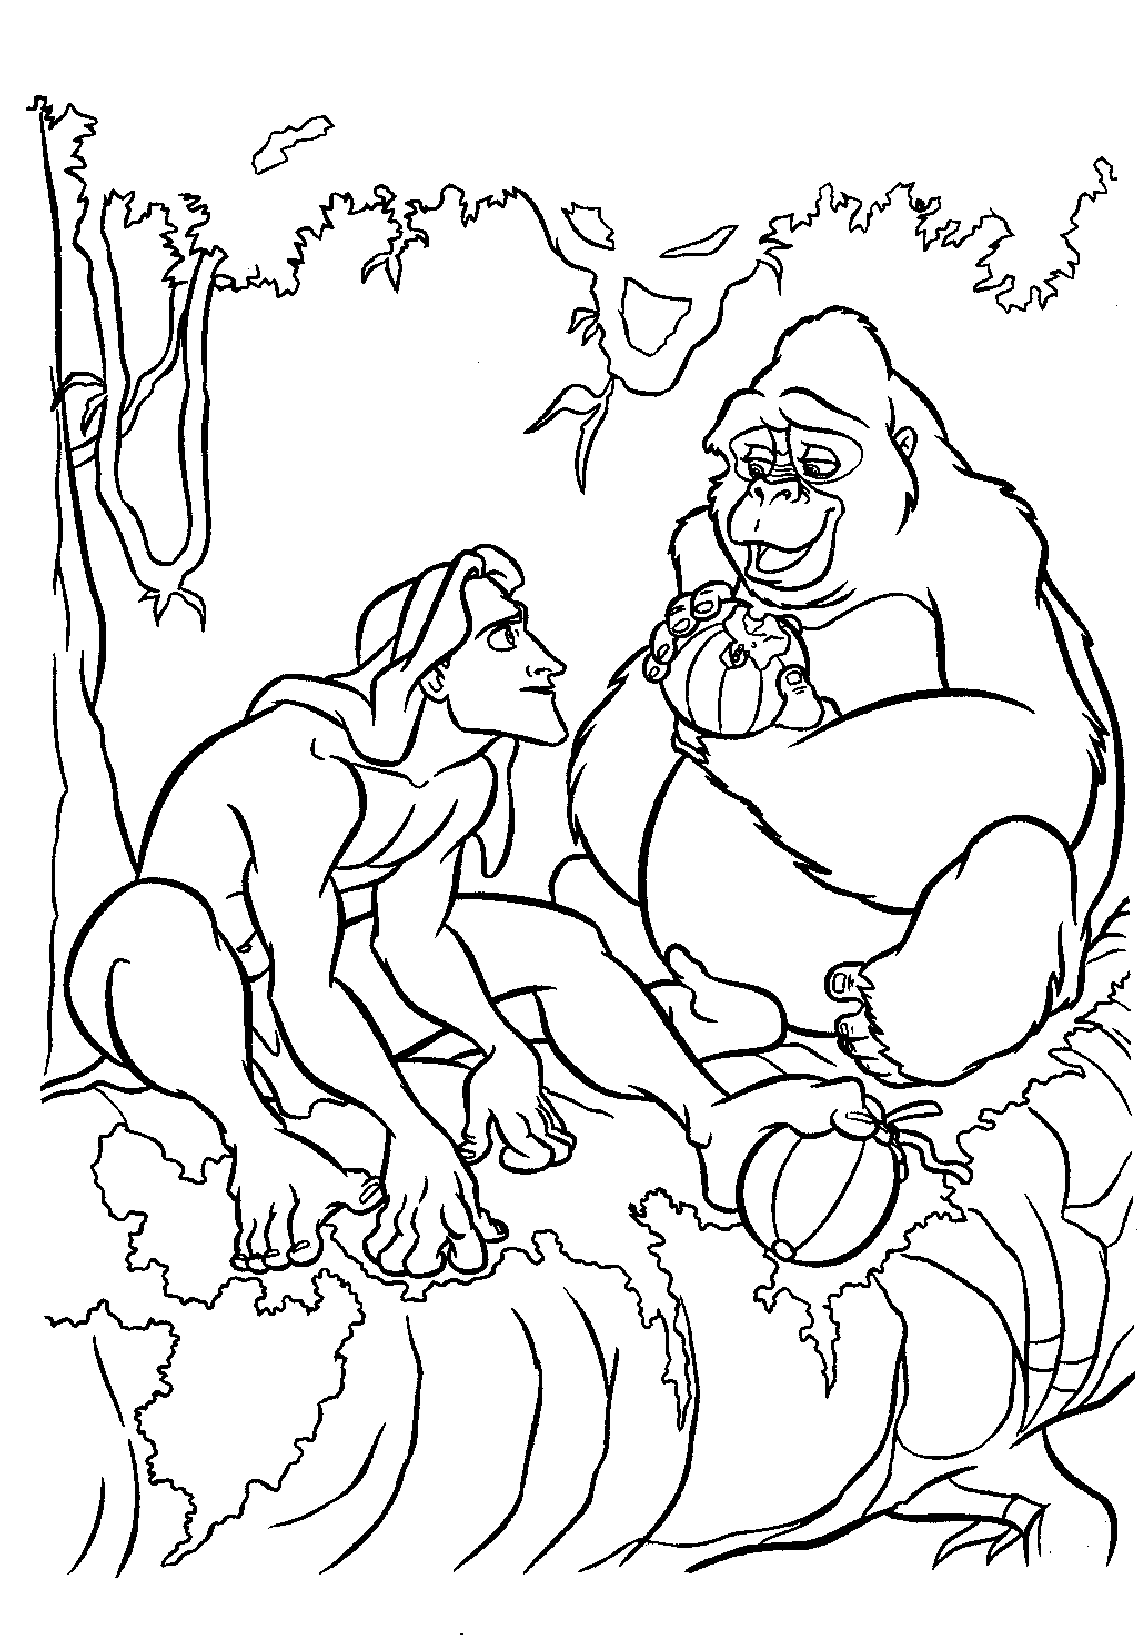 Tarzan adulte à colorier, avec sa mère adoptive